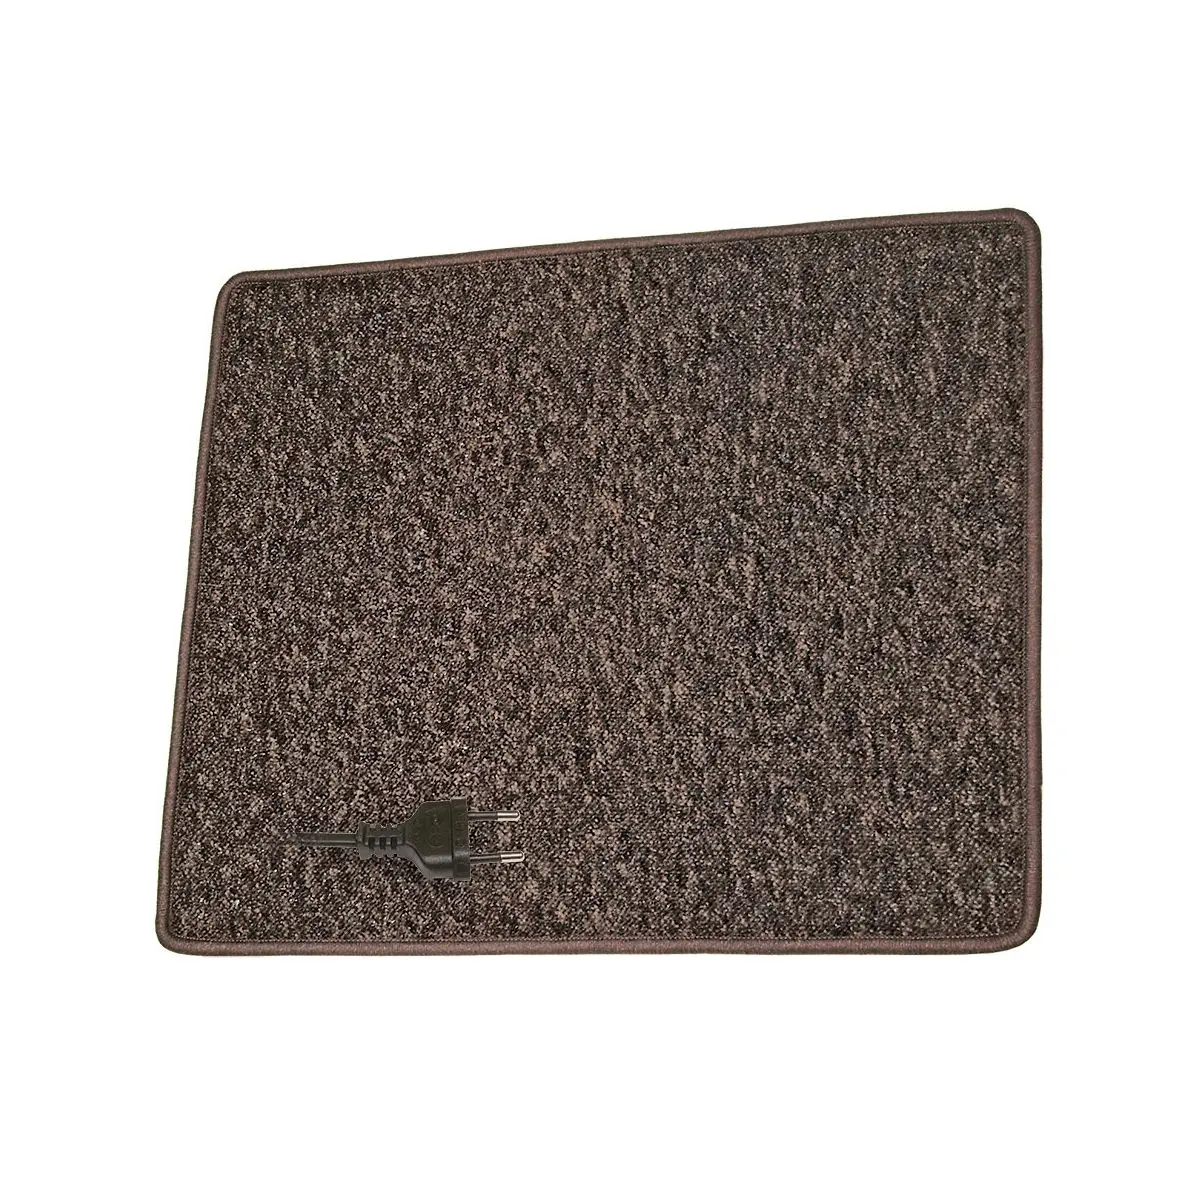 Fűtött szőnyeg - 230 V/25 W, 60 x 40 cm, barna